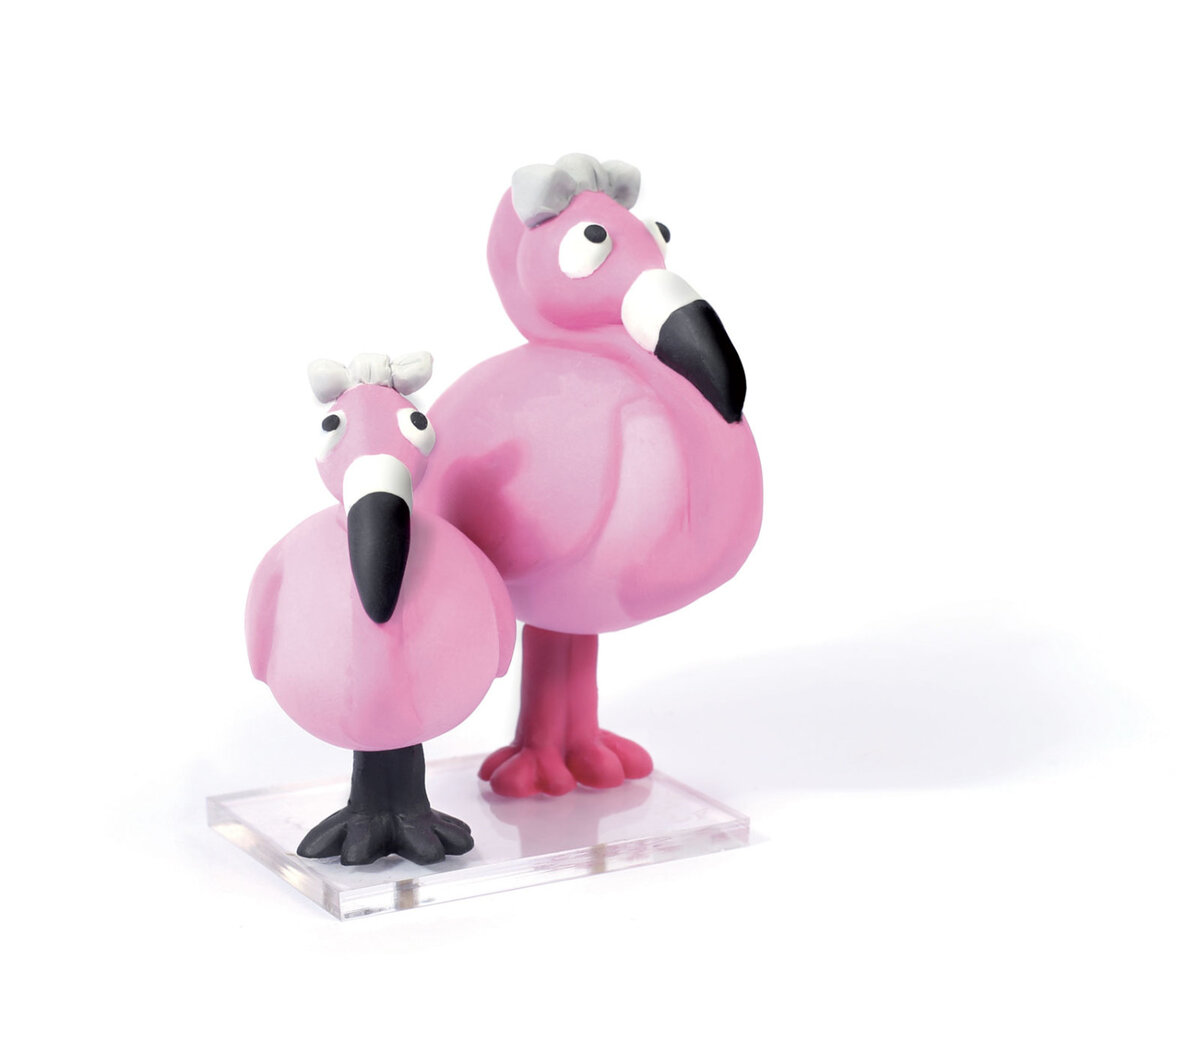 Kit ma première figurine pinky et rosy (fimo soft) - La Poste